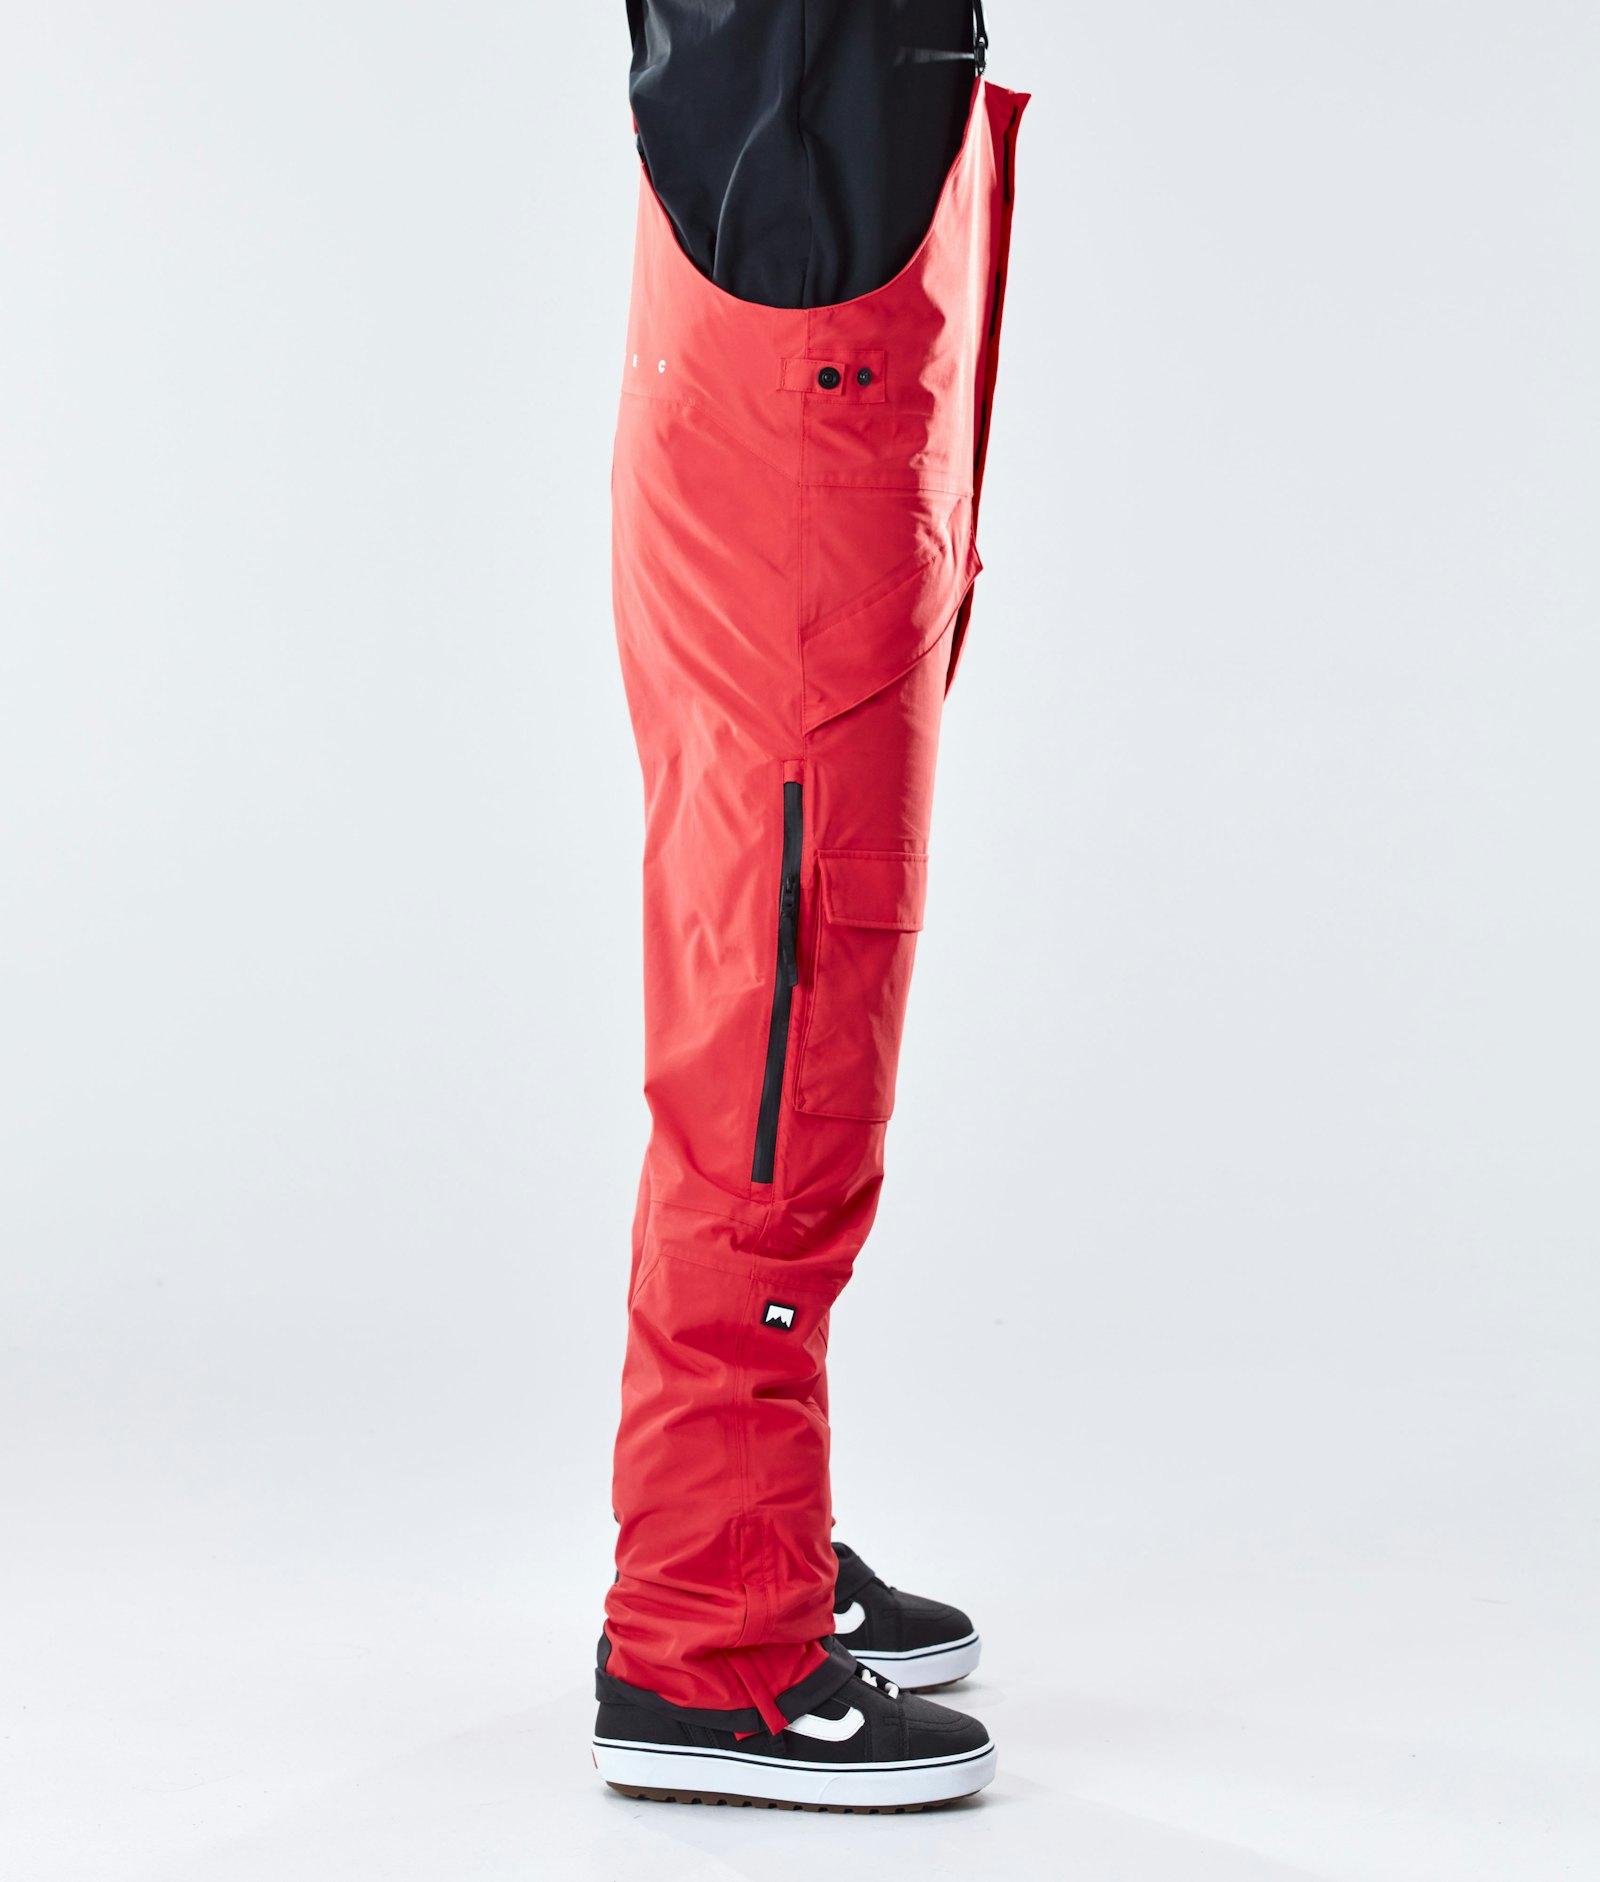 Fawk 2020 Snowboard Pants Men Red Renewed, Image 2 of 6